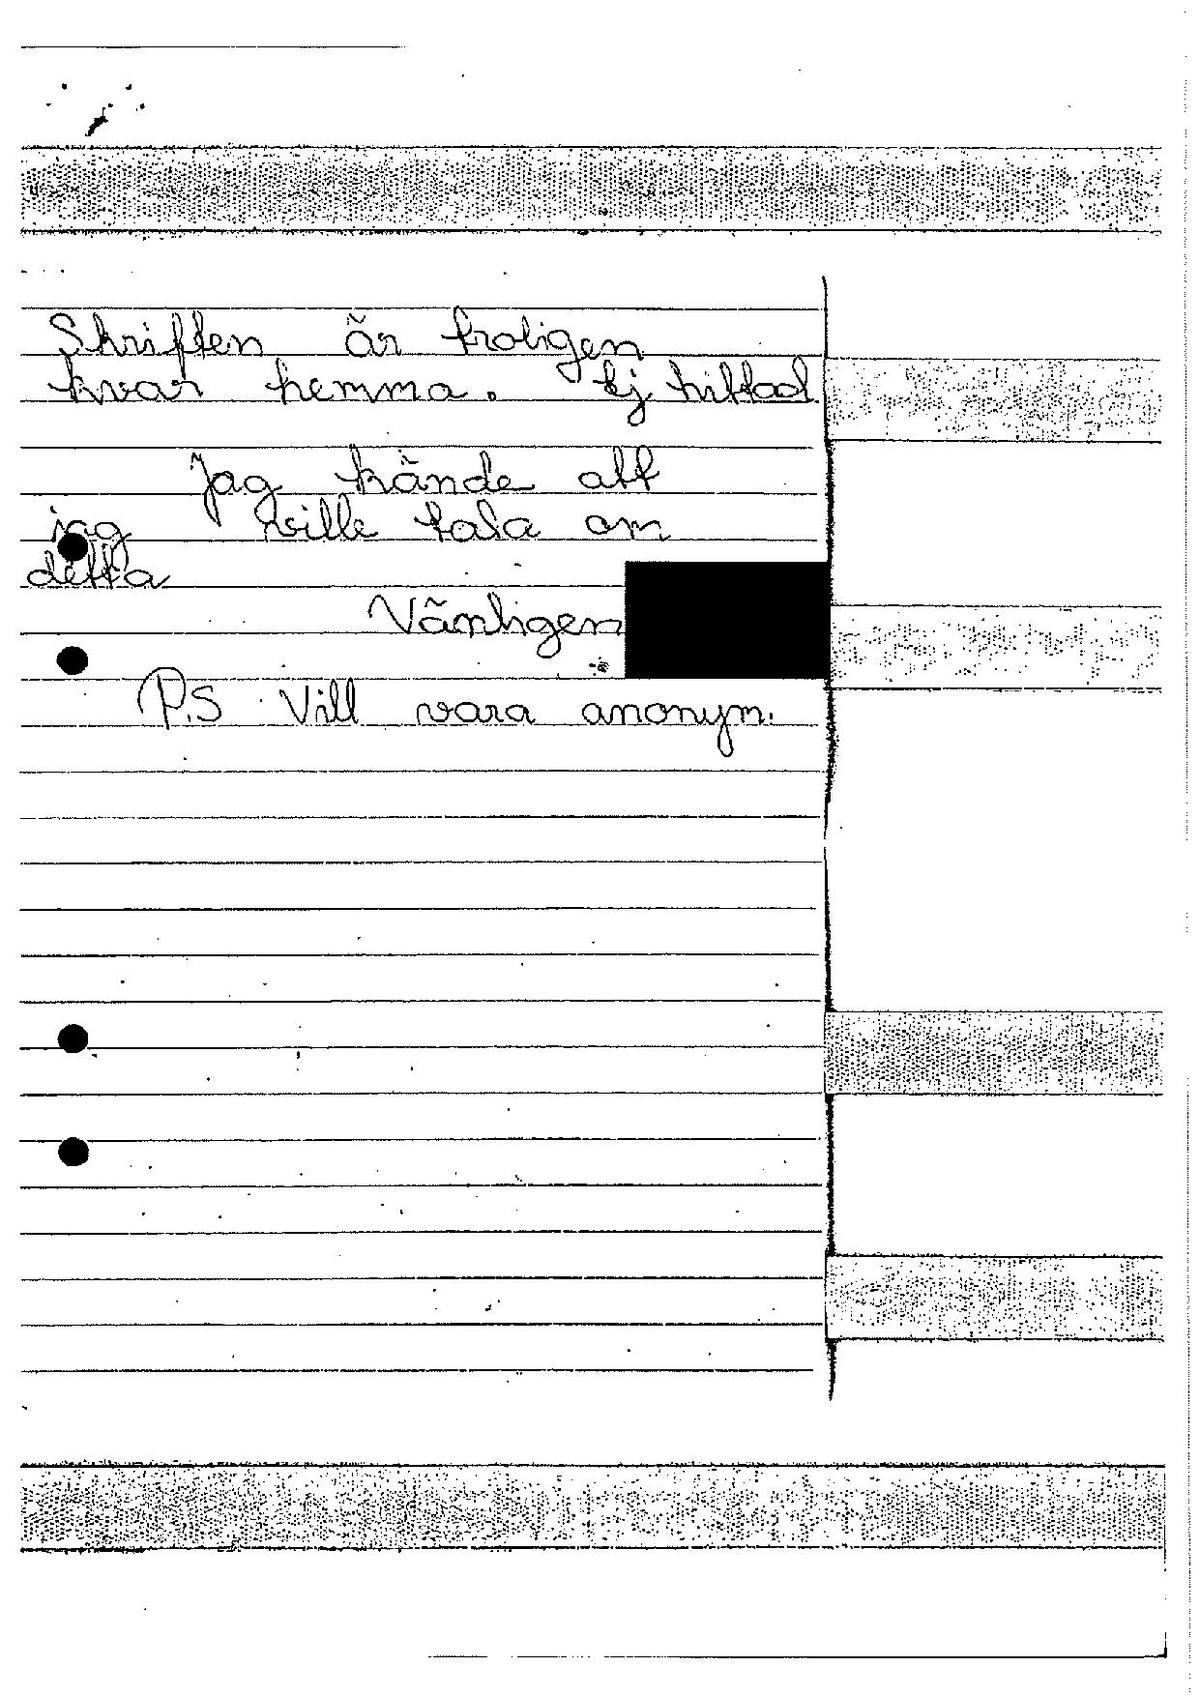 Pol-1986-03-28 HG1008-00 Brev-Örebro-tips-bibelskola-Uppsala.pdf